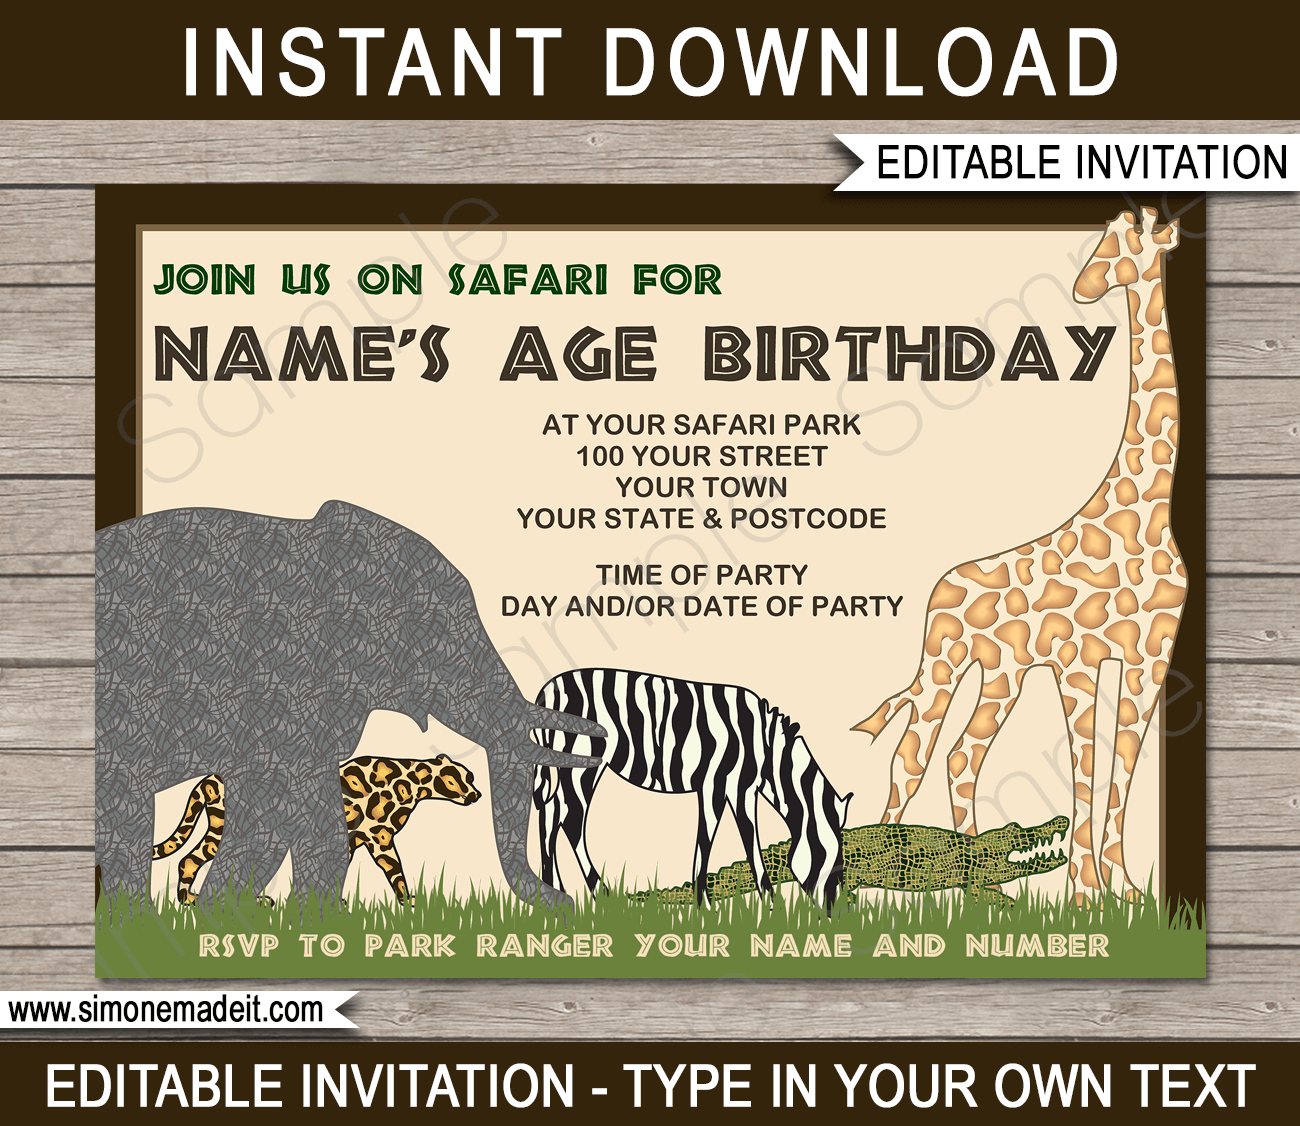 Zoo Party Invitations | Animal Safari | Jungle | Birthday Party | Editable DIY Theme Template | INSTANT DOWNLOAD $7.50 via SIMONEmadeit.com